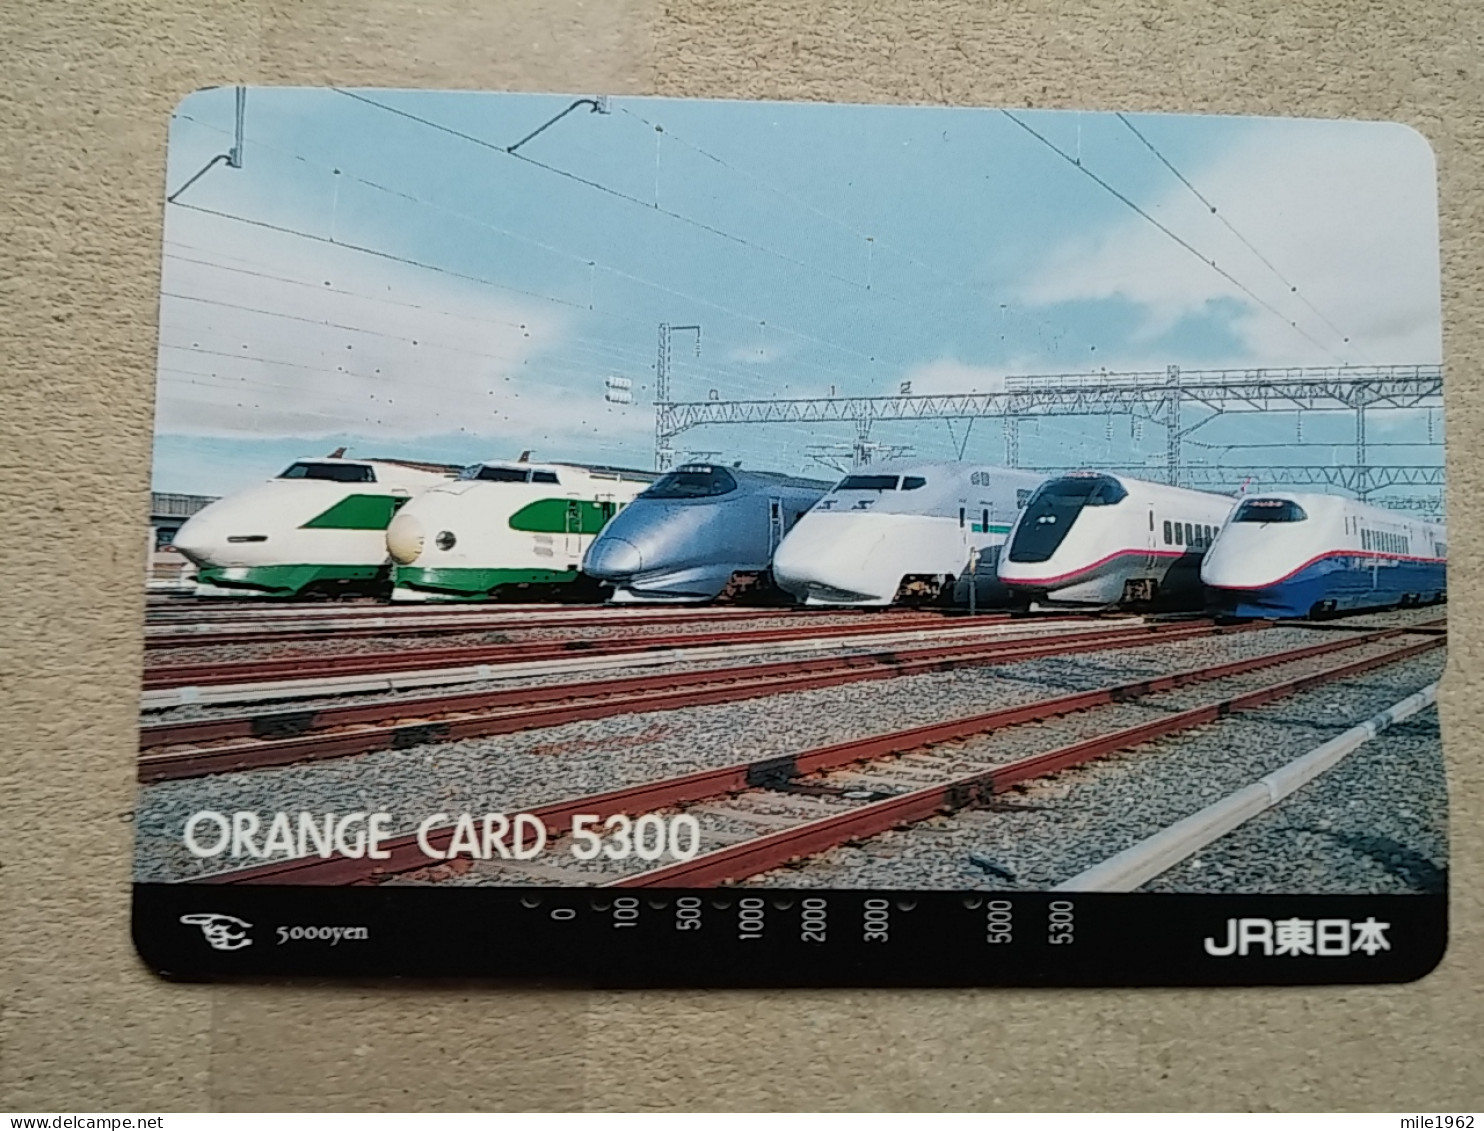 T-616 - JAPAN, Japon, Nipon, Carte Prepayee, Prepaid Card, CARD, RAILWAY, TRAIN, CHEMIN DE FER - Treni